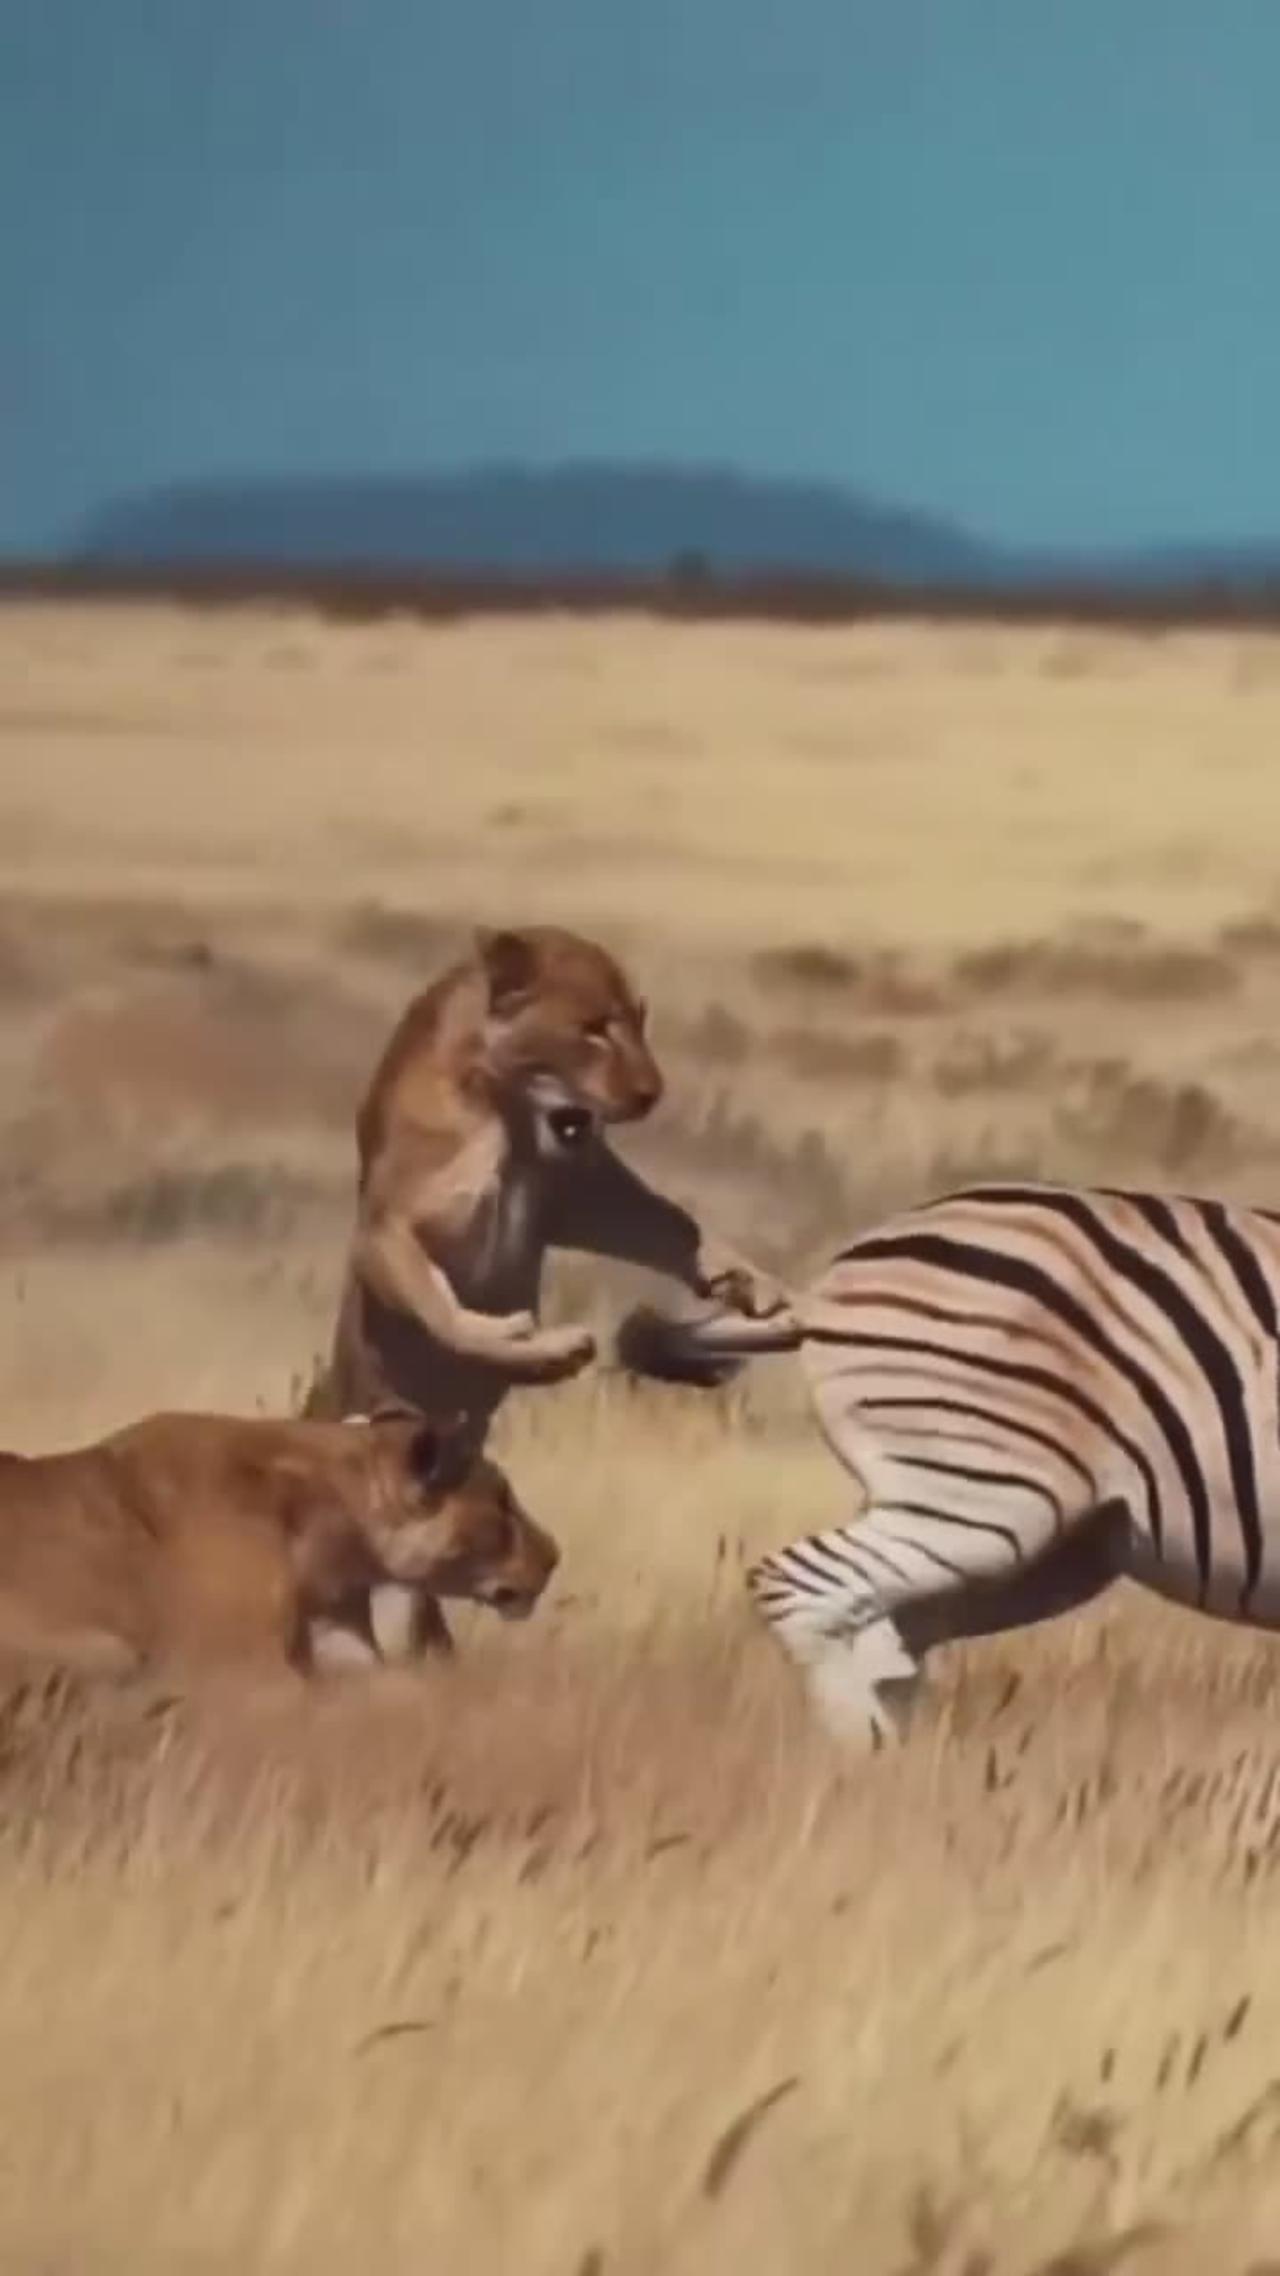 Lion Attack on zebra